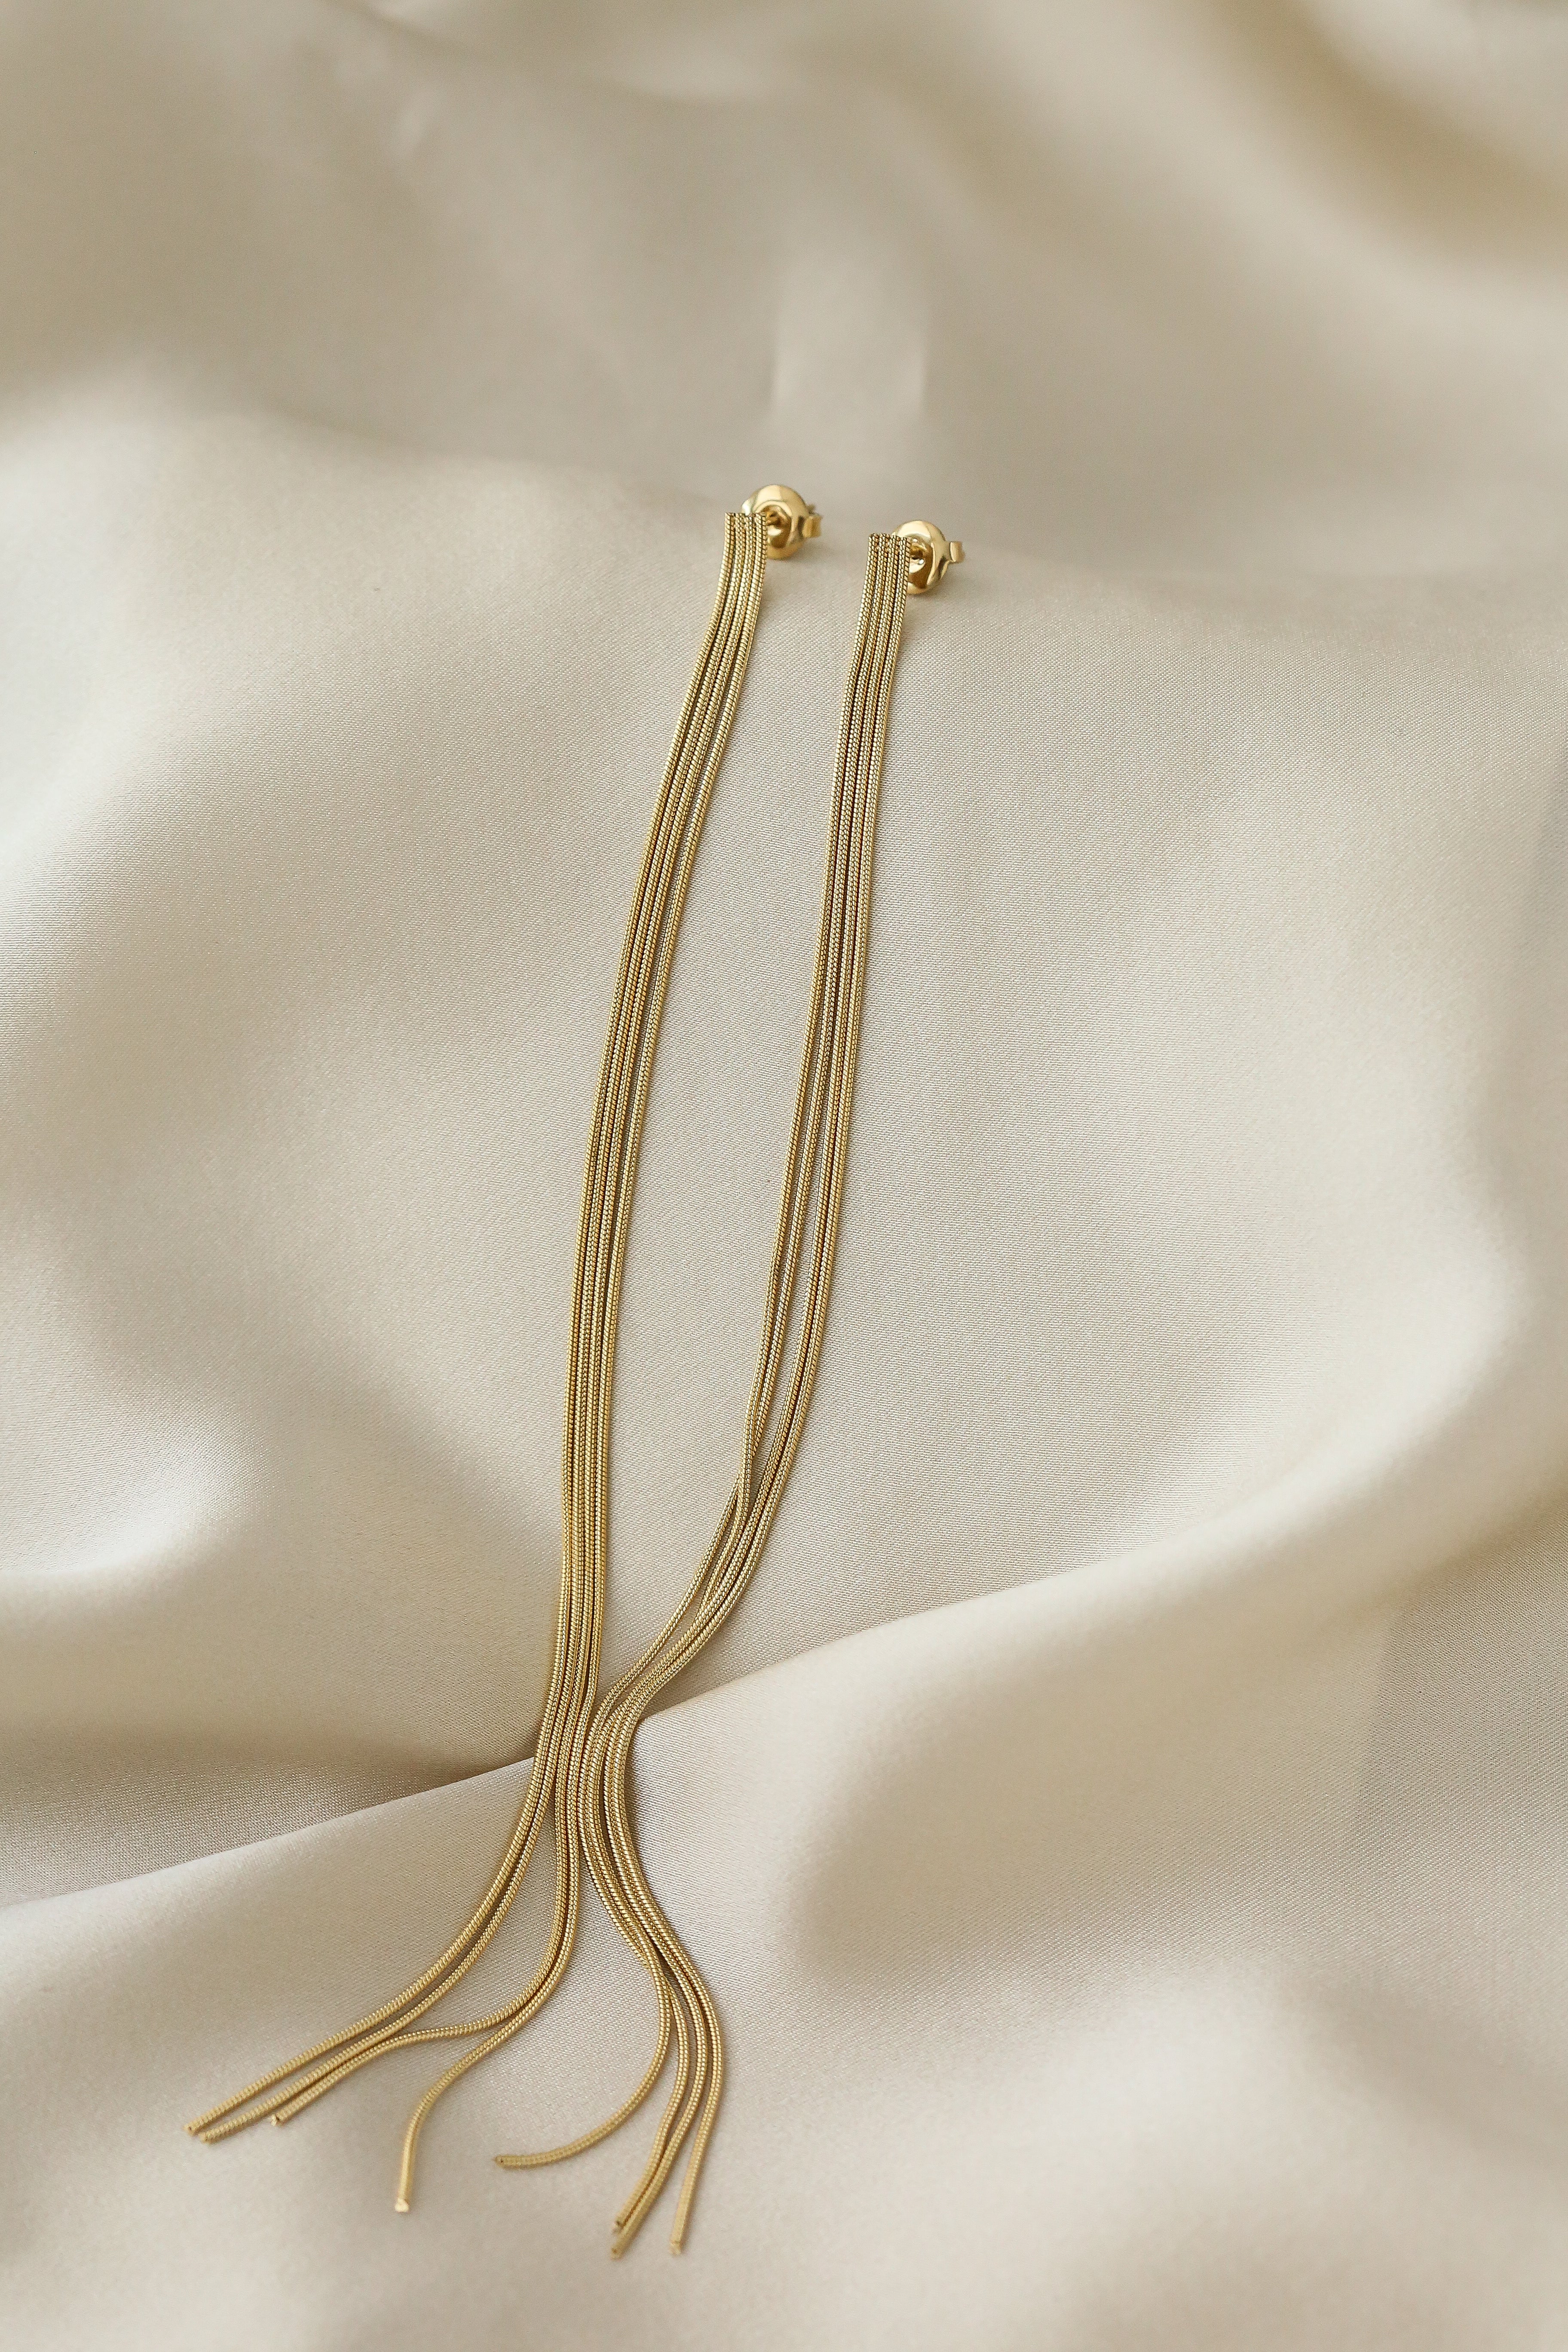 Whisper Earrings - Boutique Minimaliste has waterproof, durable, elegant and vintage inspired jewelry